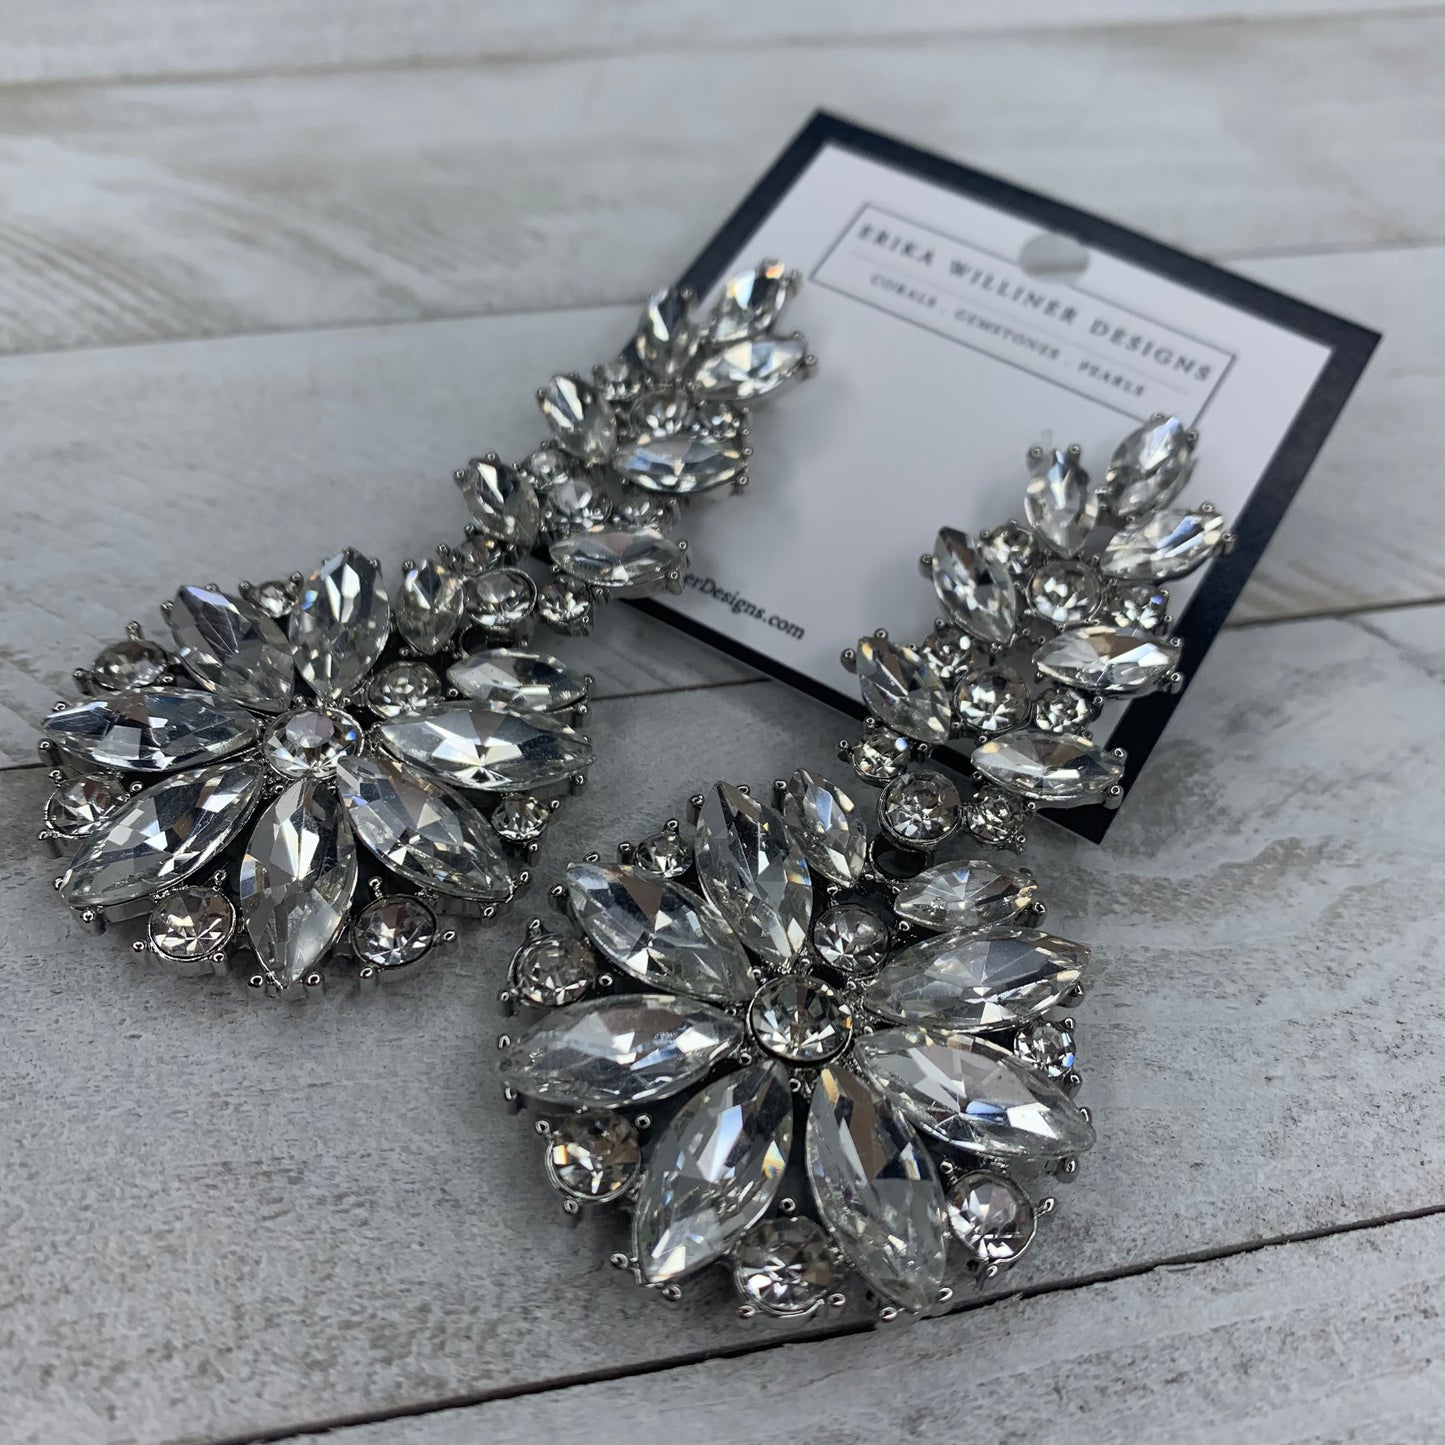 Erika Williner Designs - Magnolia Bling Earrings